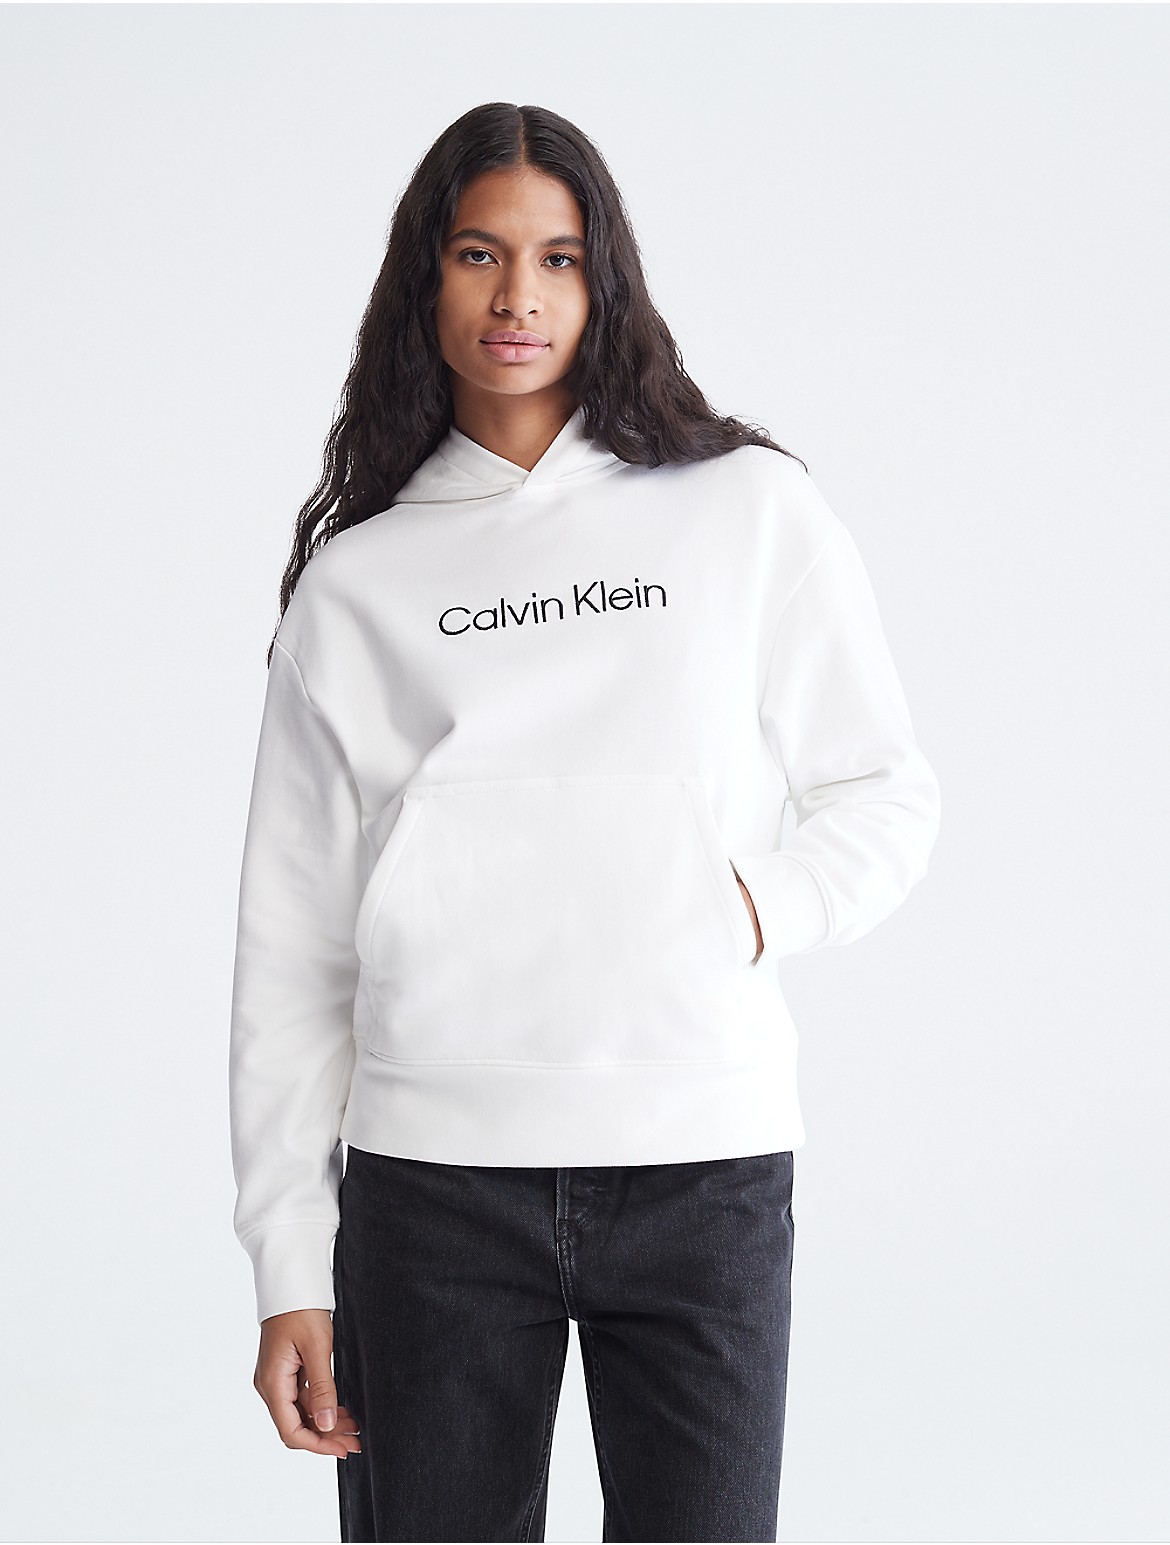 Calvin Klein Women's Relaxed Fit Standard Logo Hoodie - White - XS